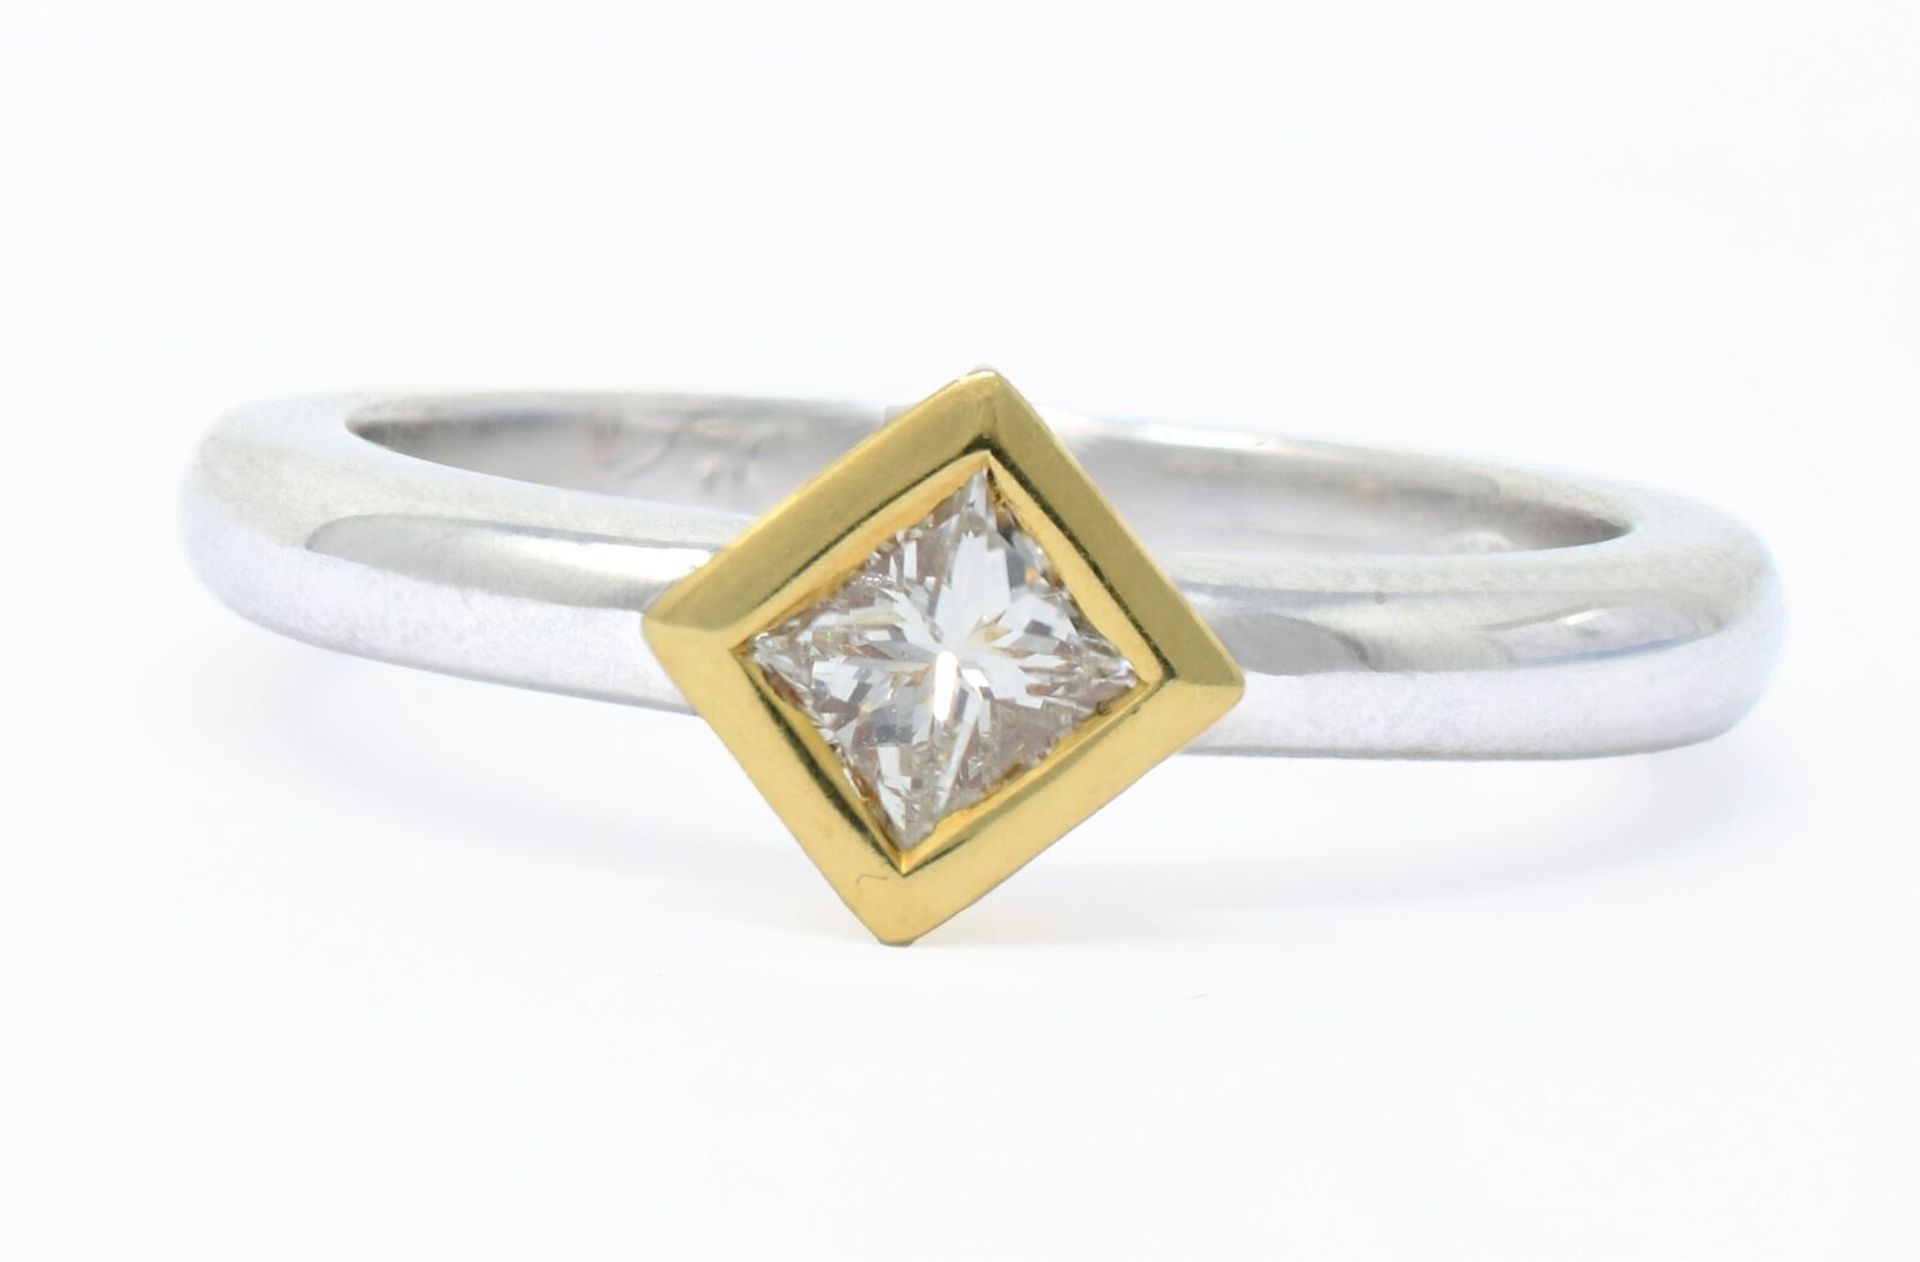 Princess Cut Diamond Ring, Metal 18ct Yellow/White Gold, Weight (g) 5.51, Diamond Weight (ct) 0.